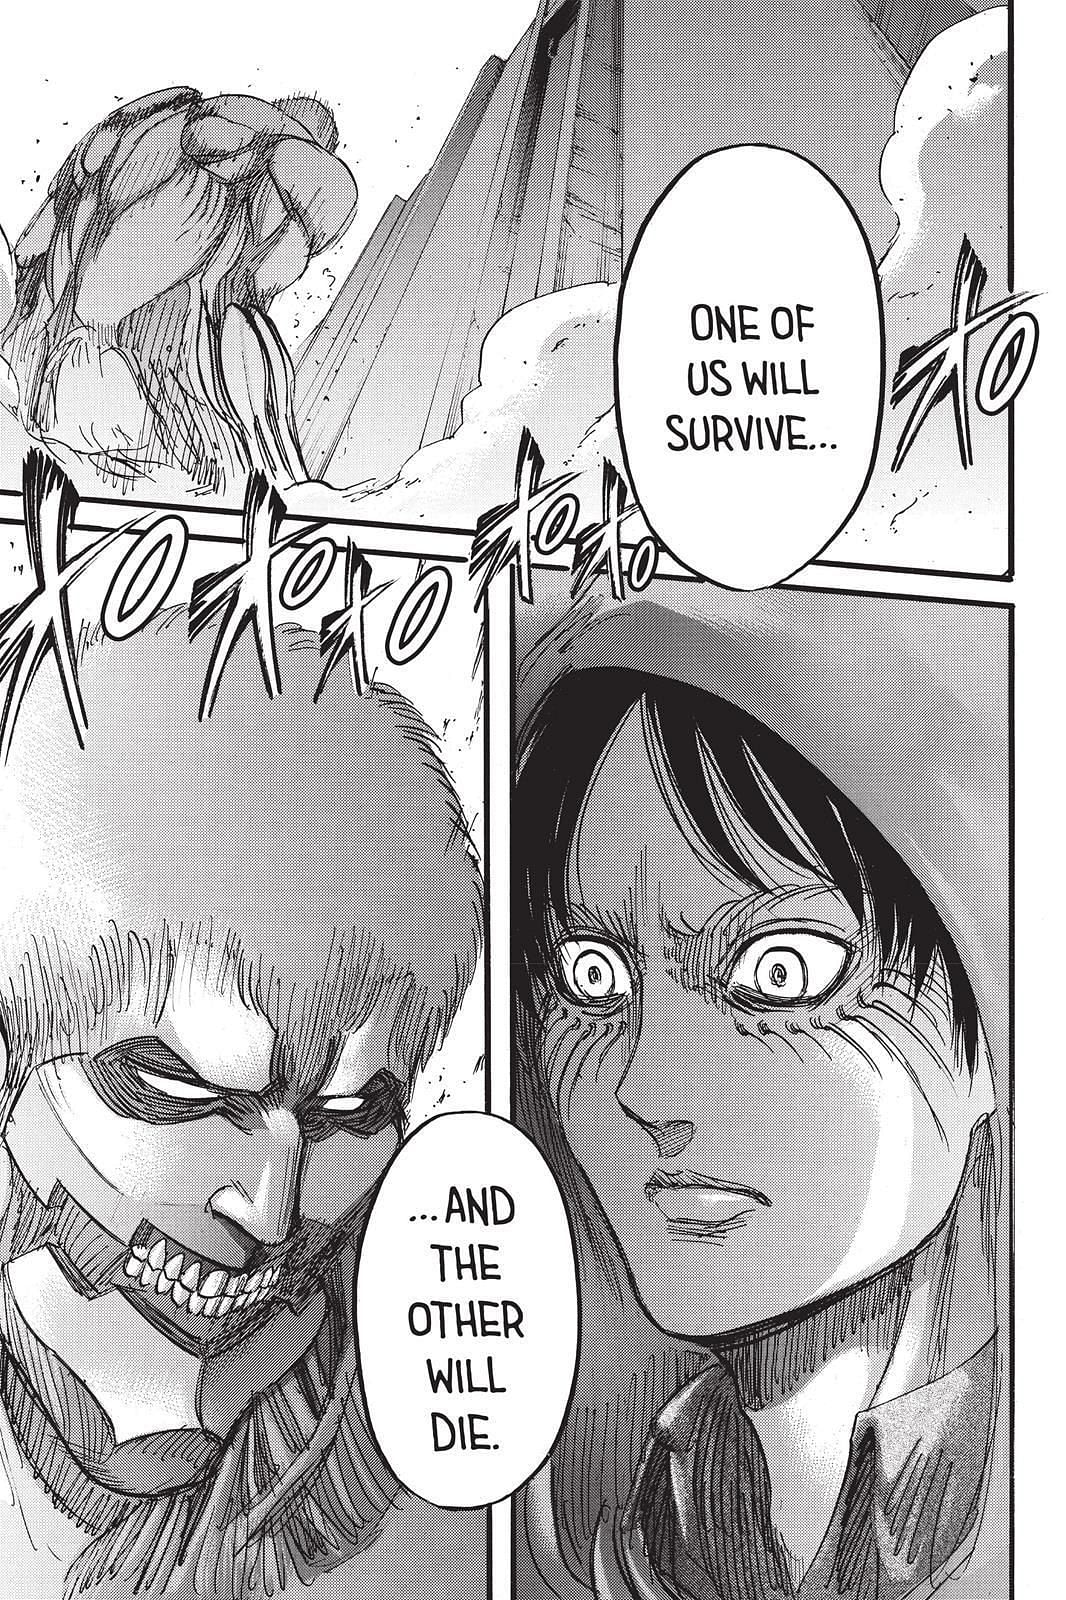 Eren vs Reiner Manga panel ( credit : Funimation)